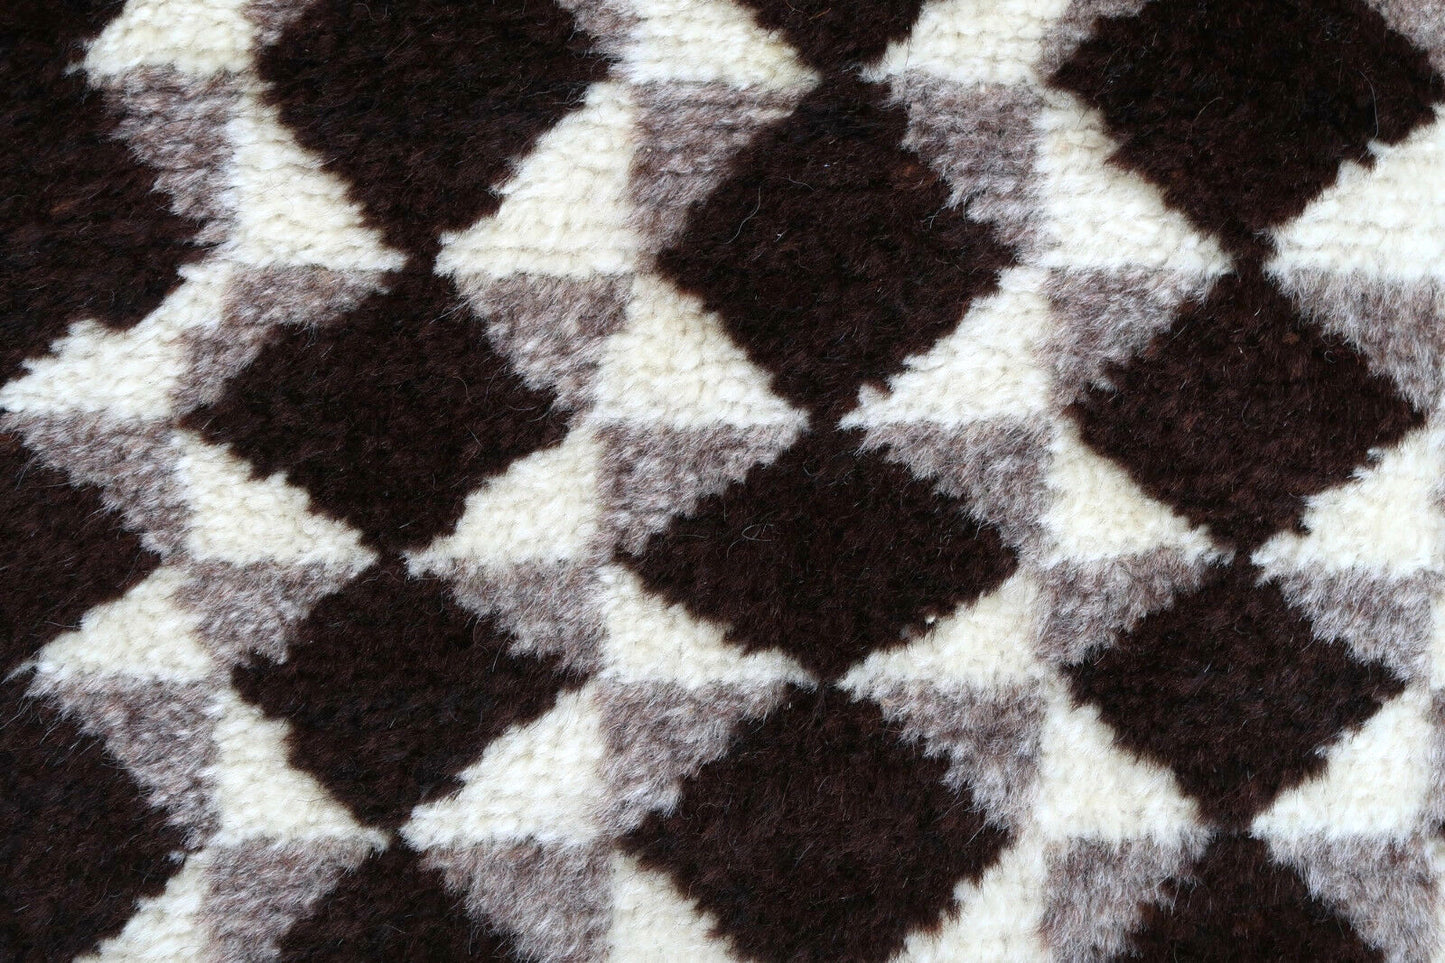 Handmade vintage Moroccan Berber rug 3.2' x 4.7' (97cm x 143cm) 1950s - 1P59